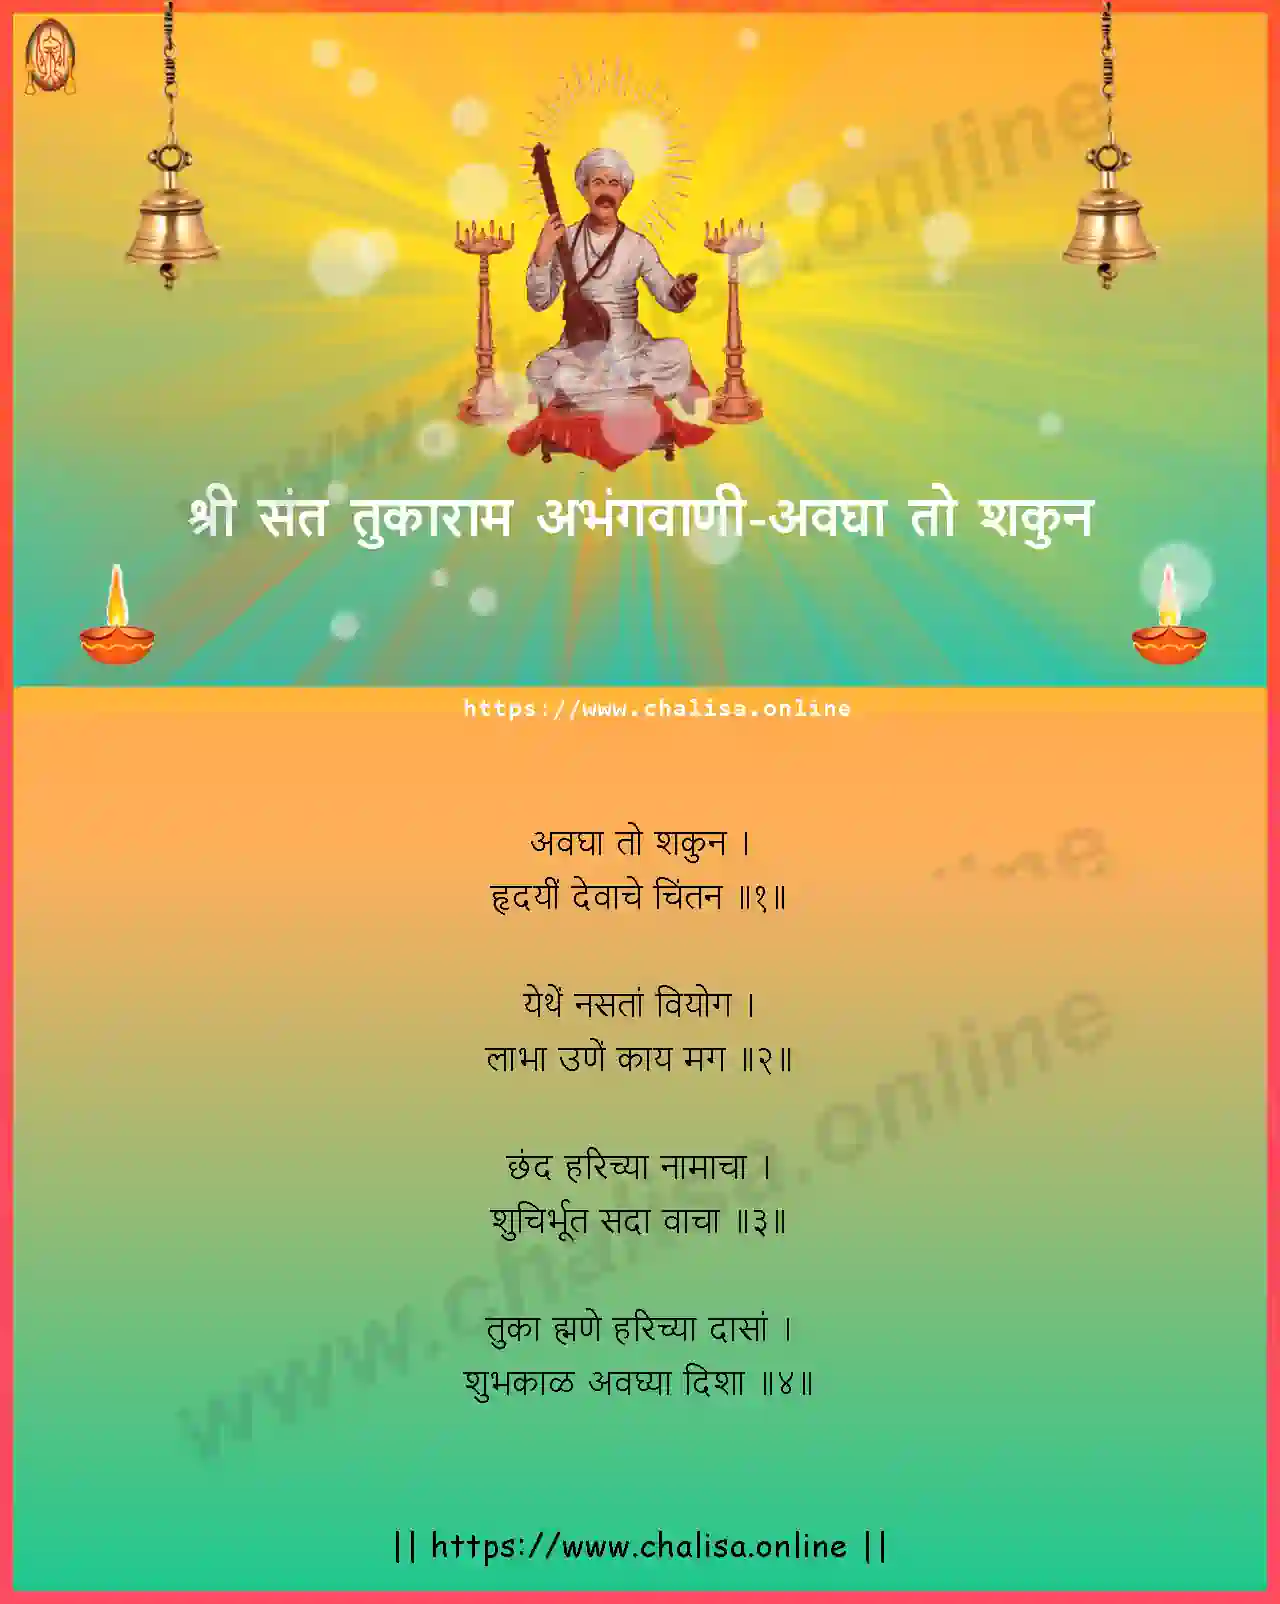 avagha-to-shakun-shri-sant-tukaram-abhang-marathi-lyrics-download